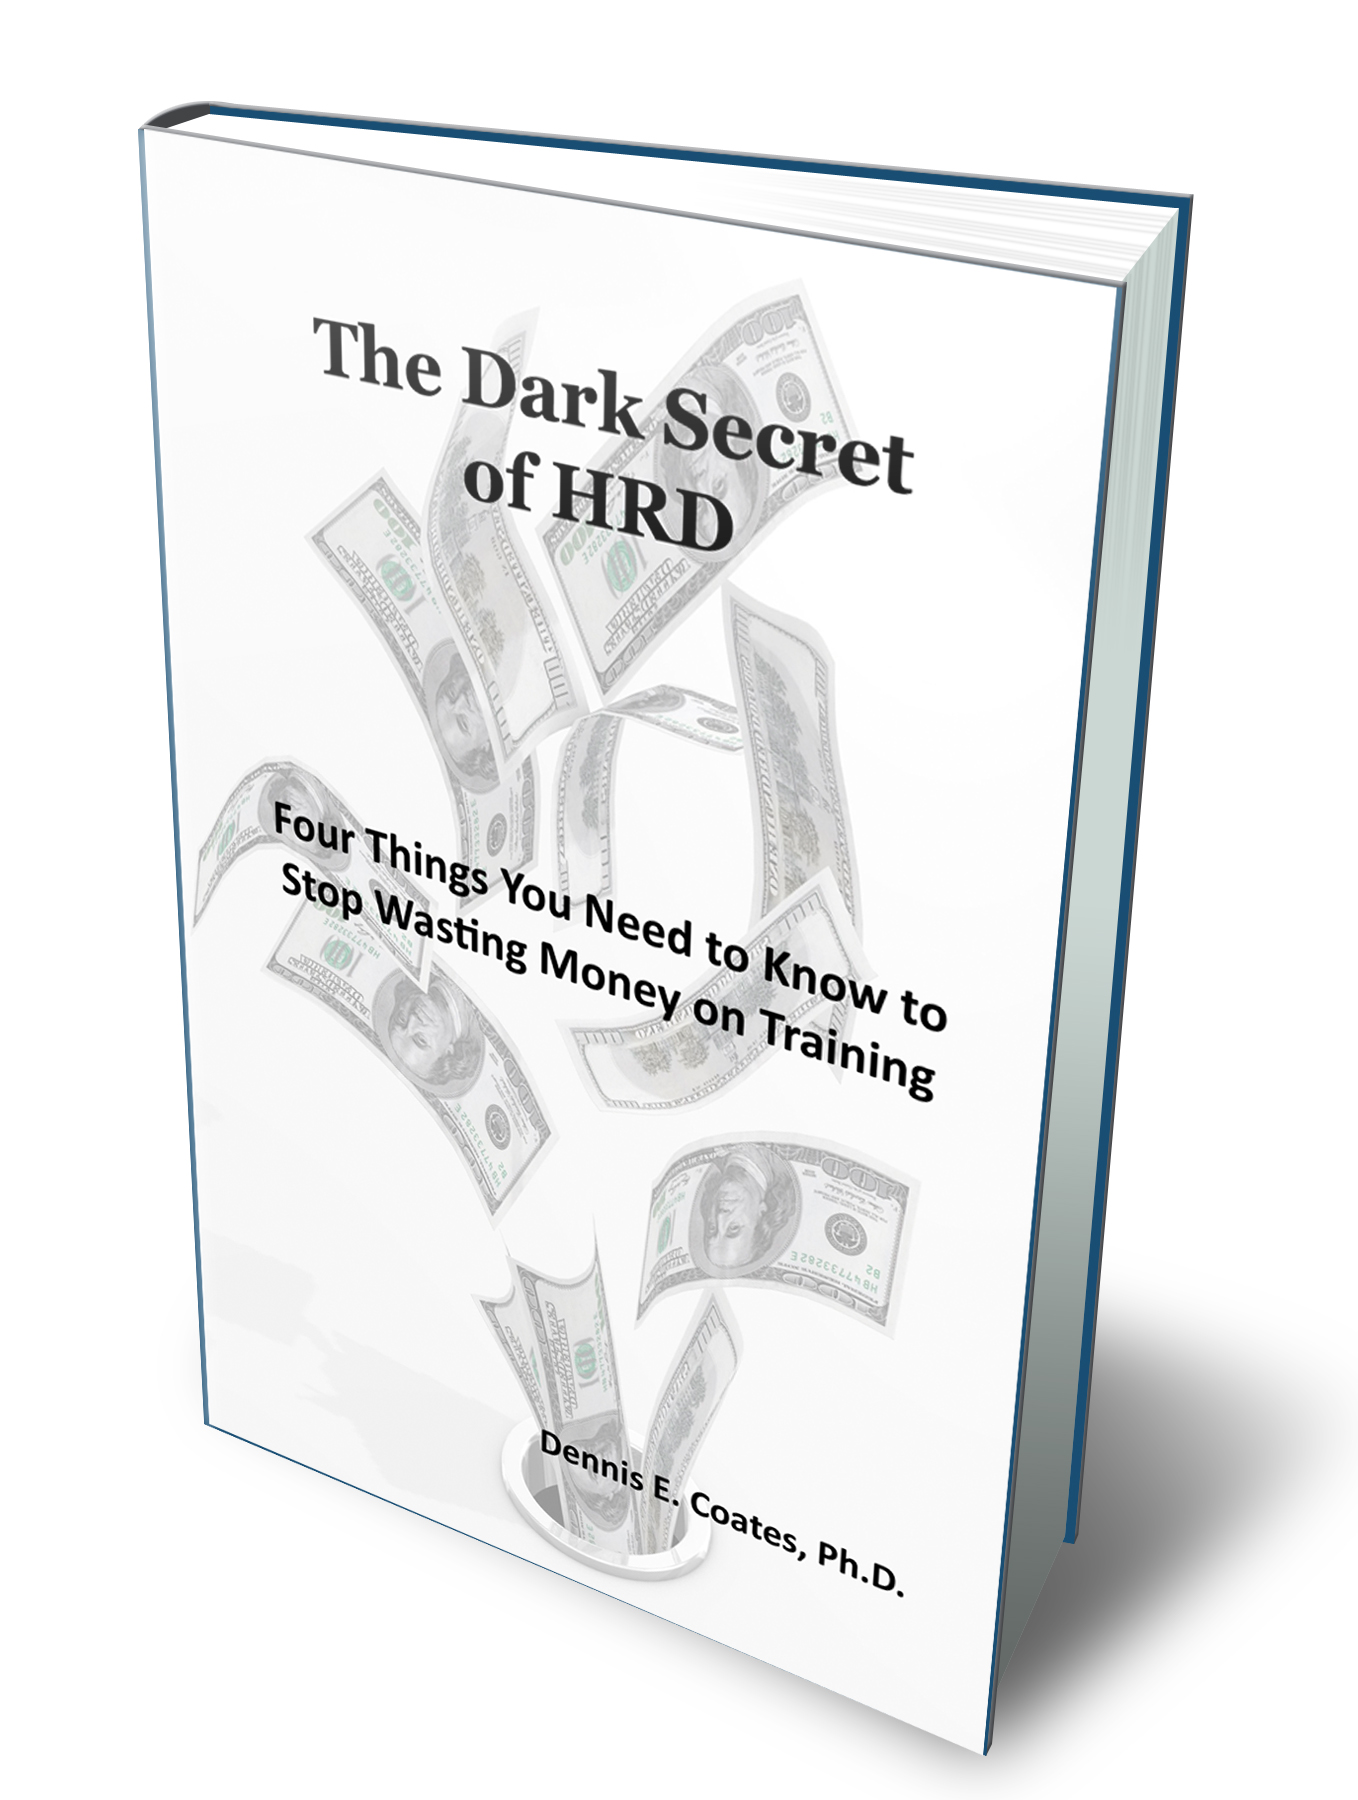 The Dark Secret of HRD